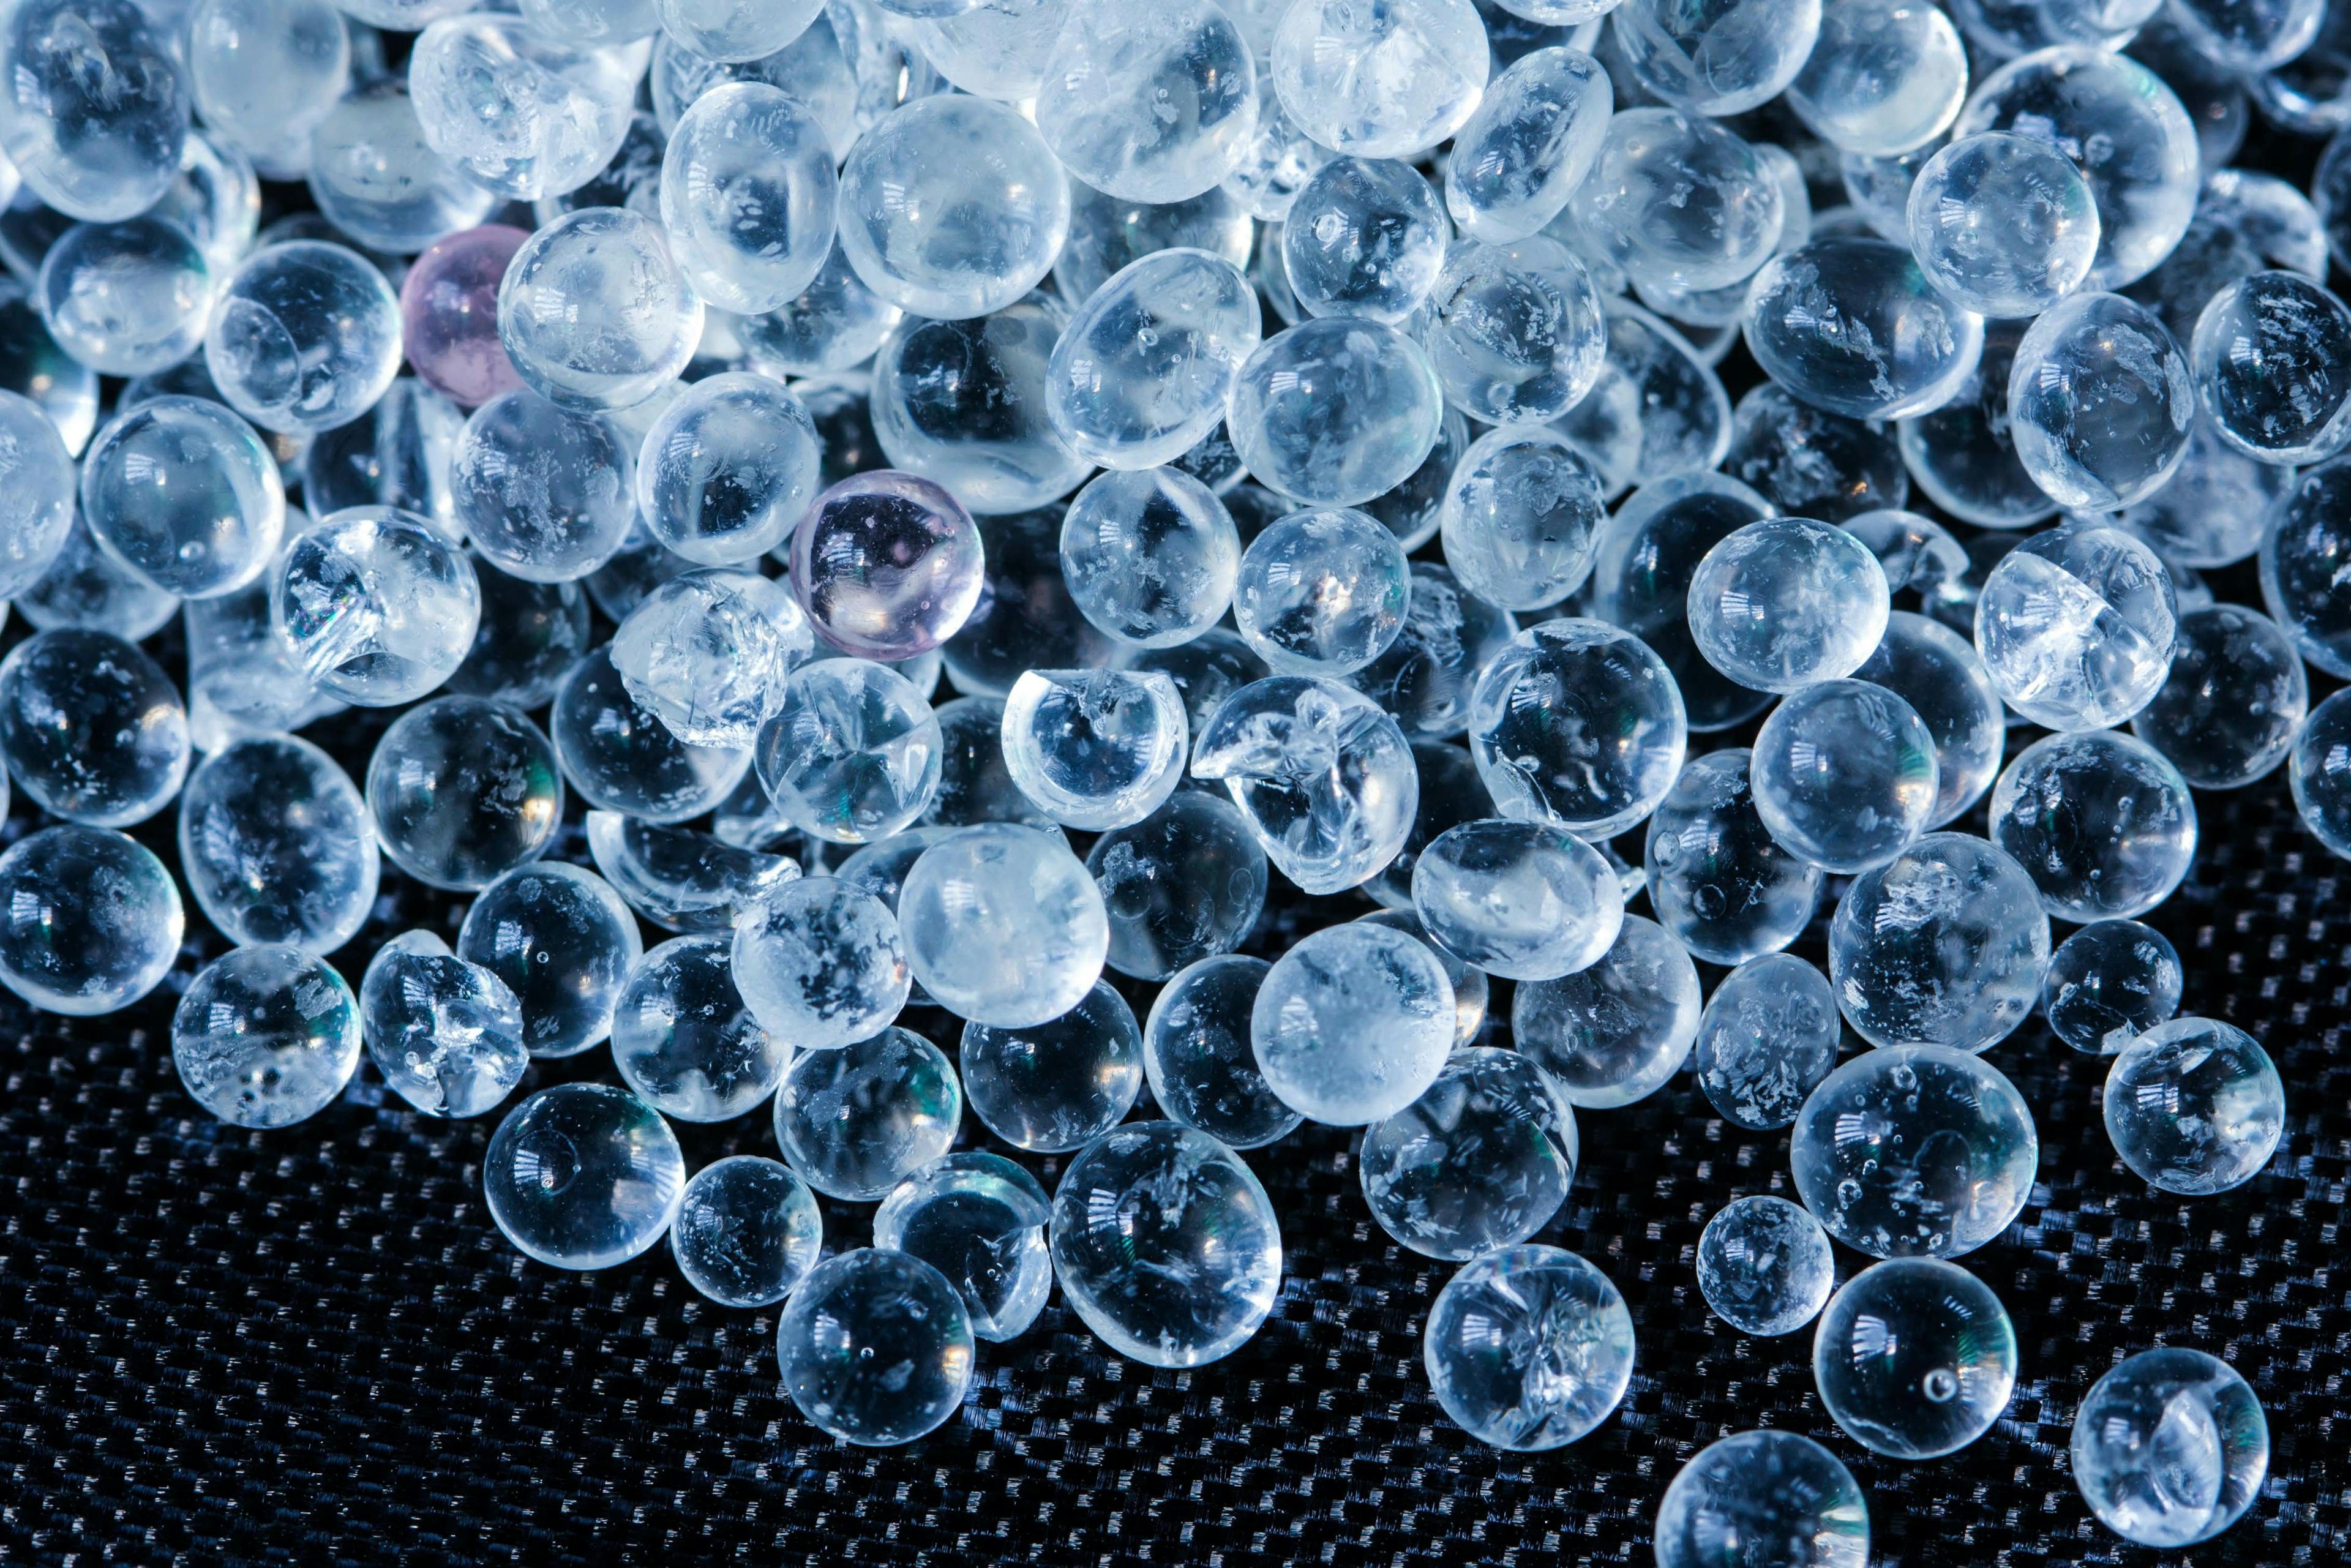 Silica beads | Image Credit: © markuso - stock.adobe.com